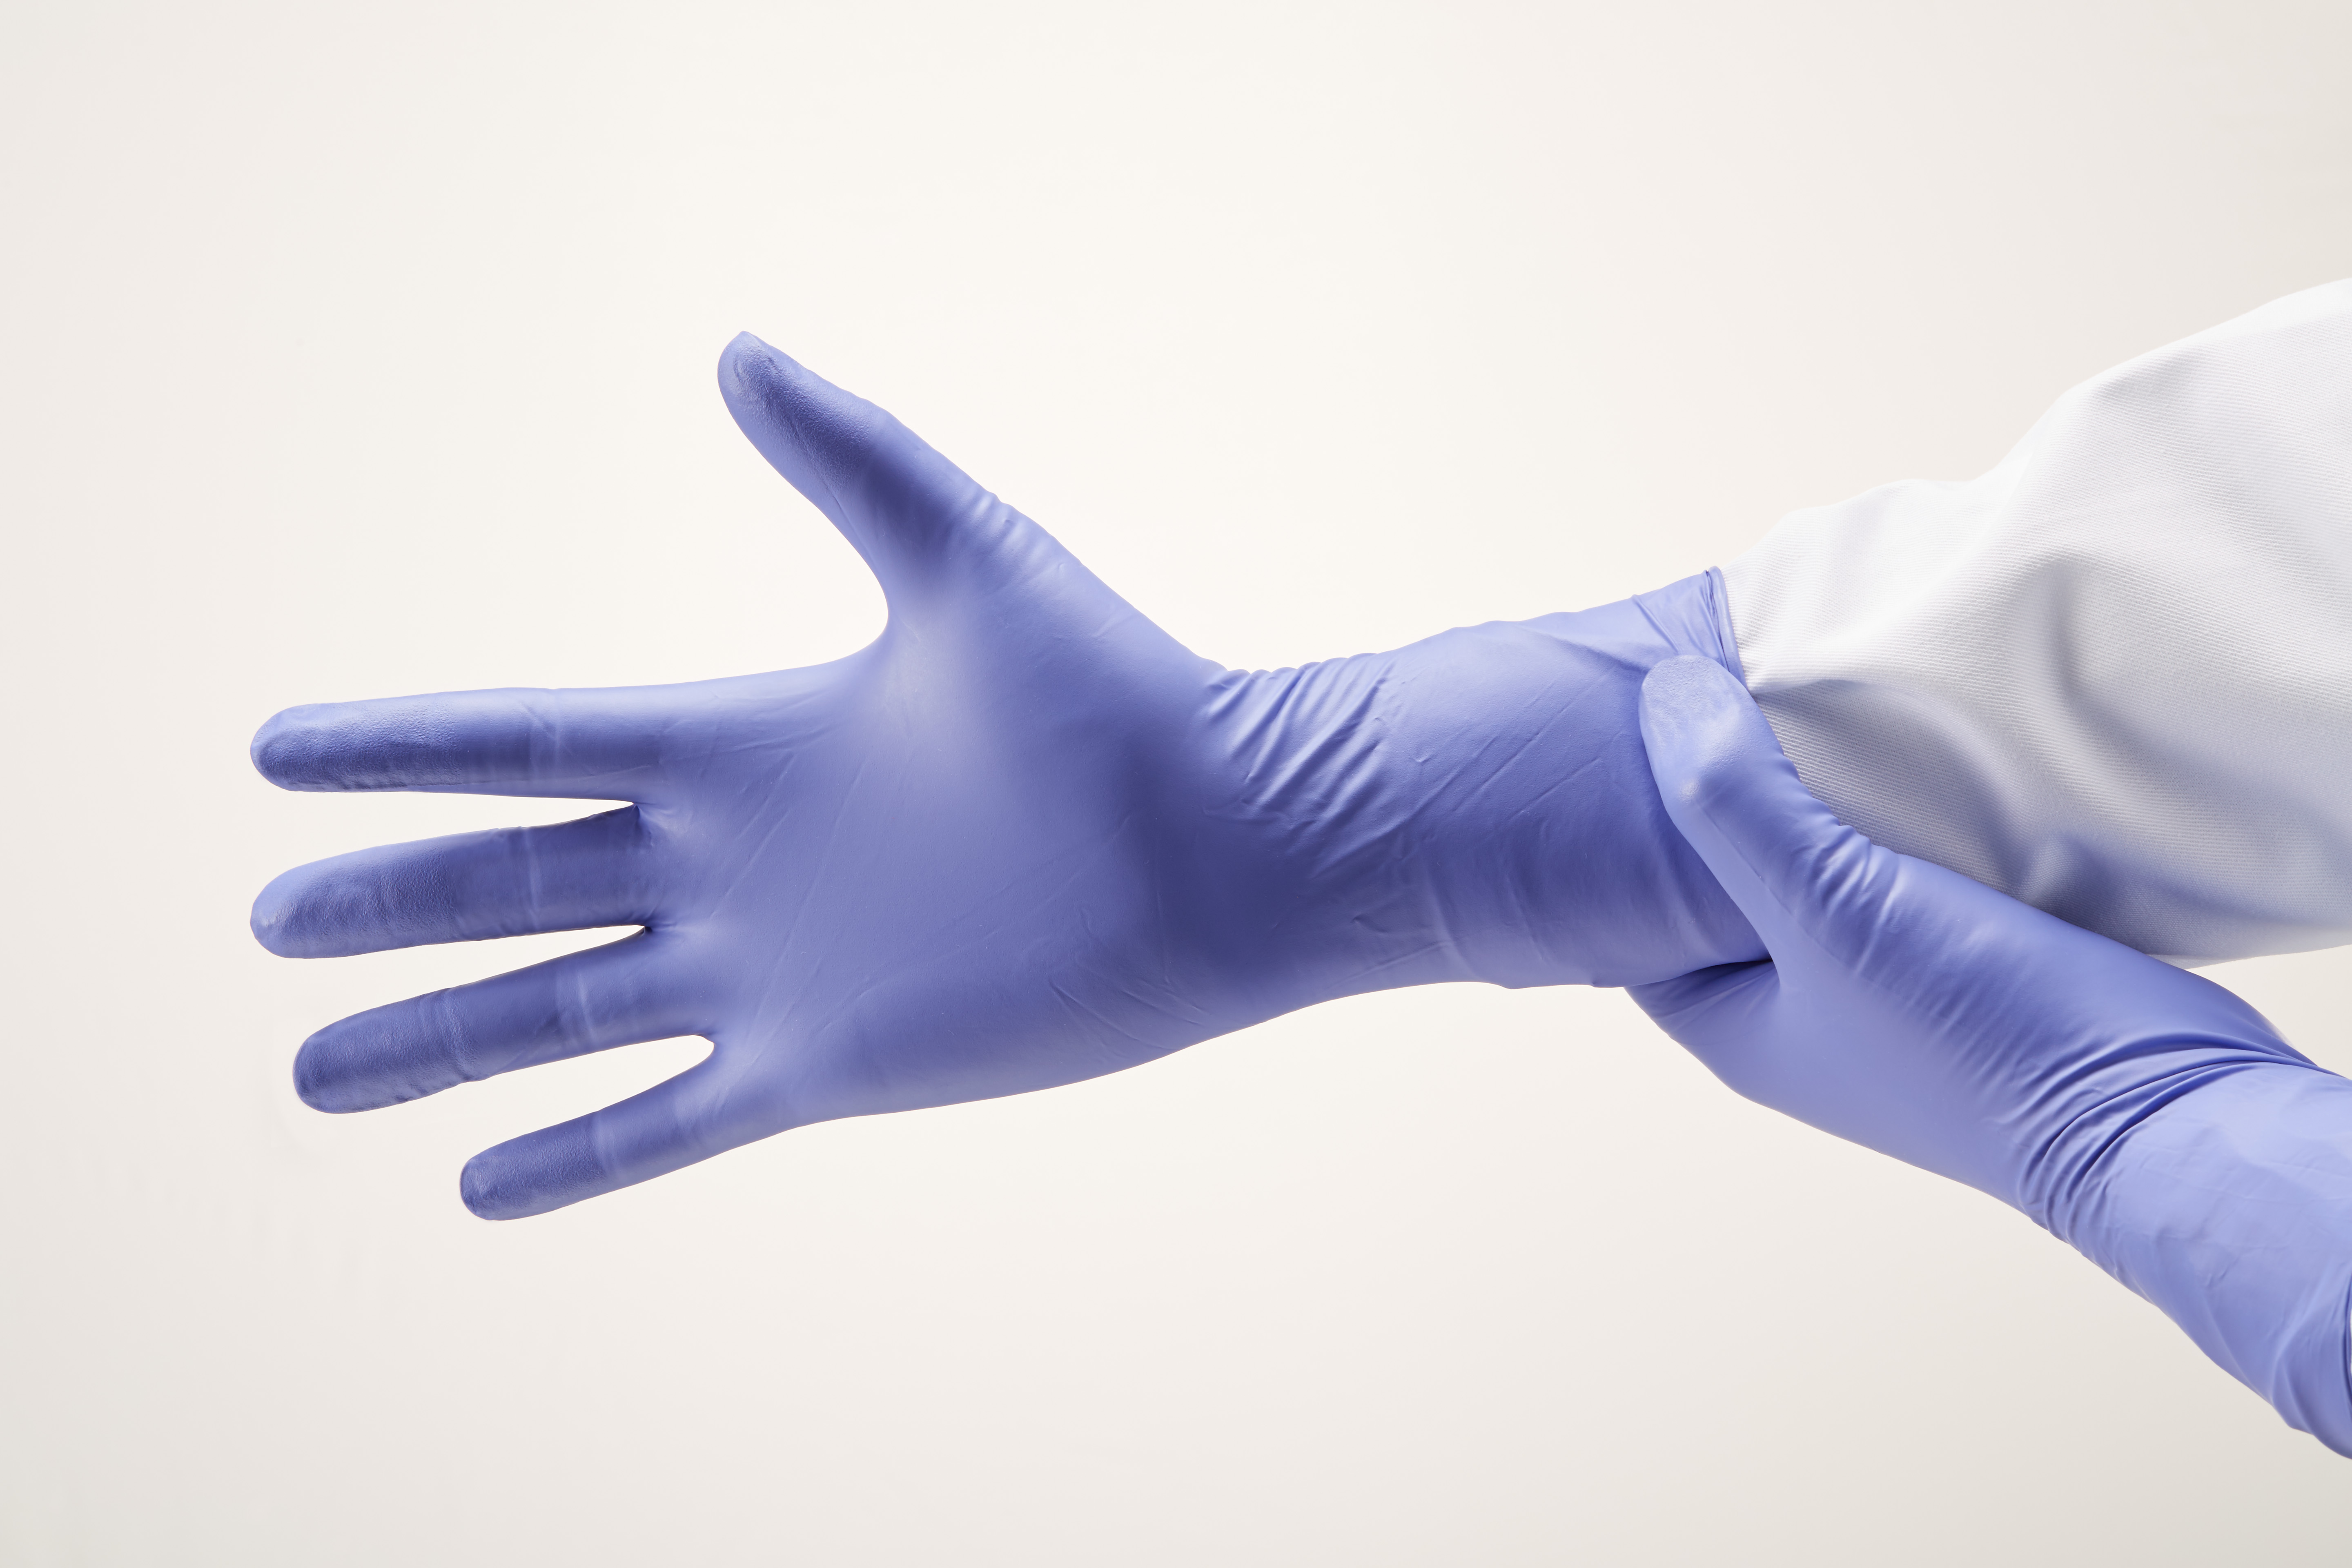  StarGuard / Microflex Protect+ Nitrile Gloves, Powder Free, Violet-Blue, Size XL, Pk/ 10 x 50 gloves.